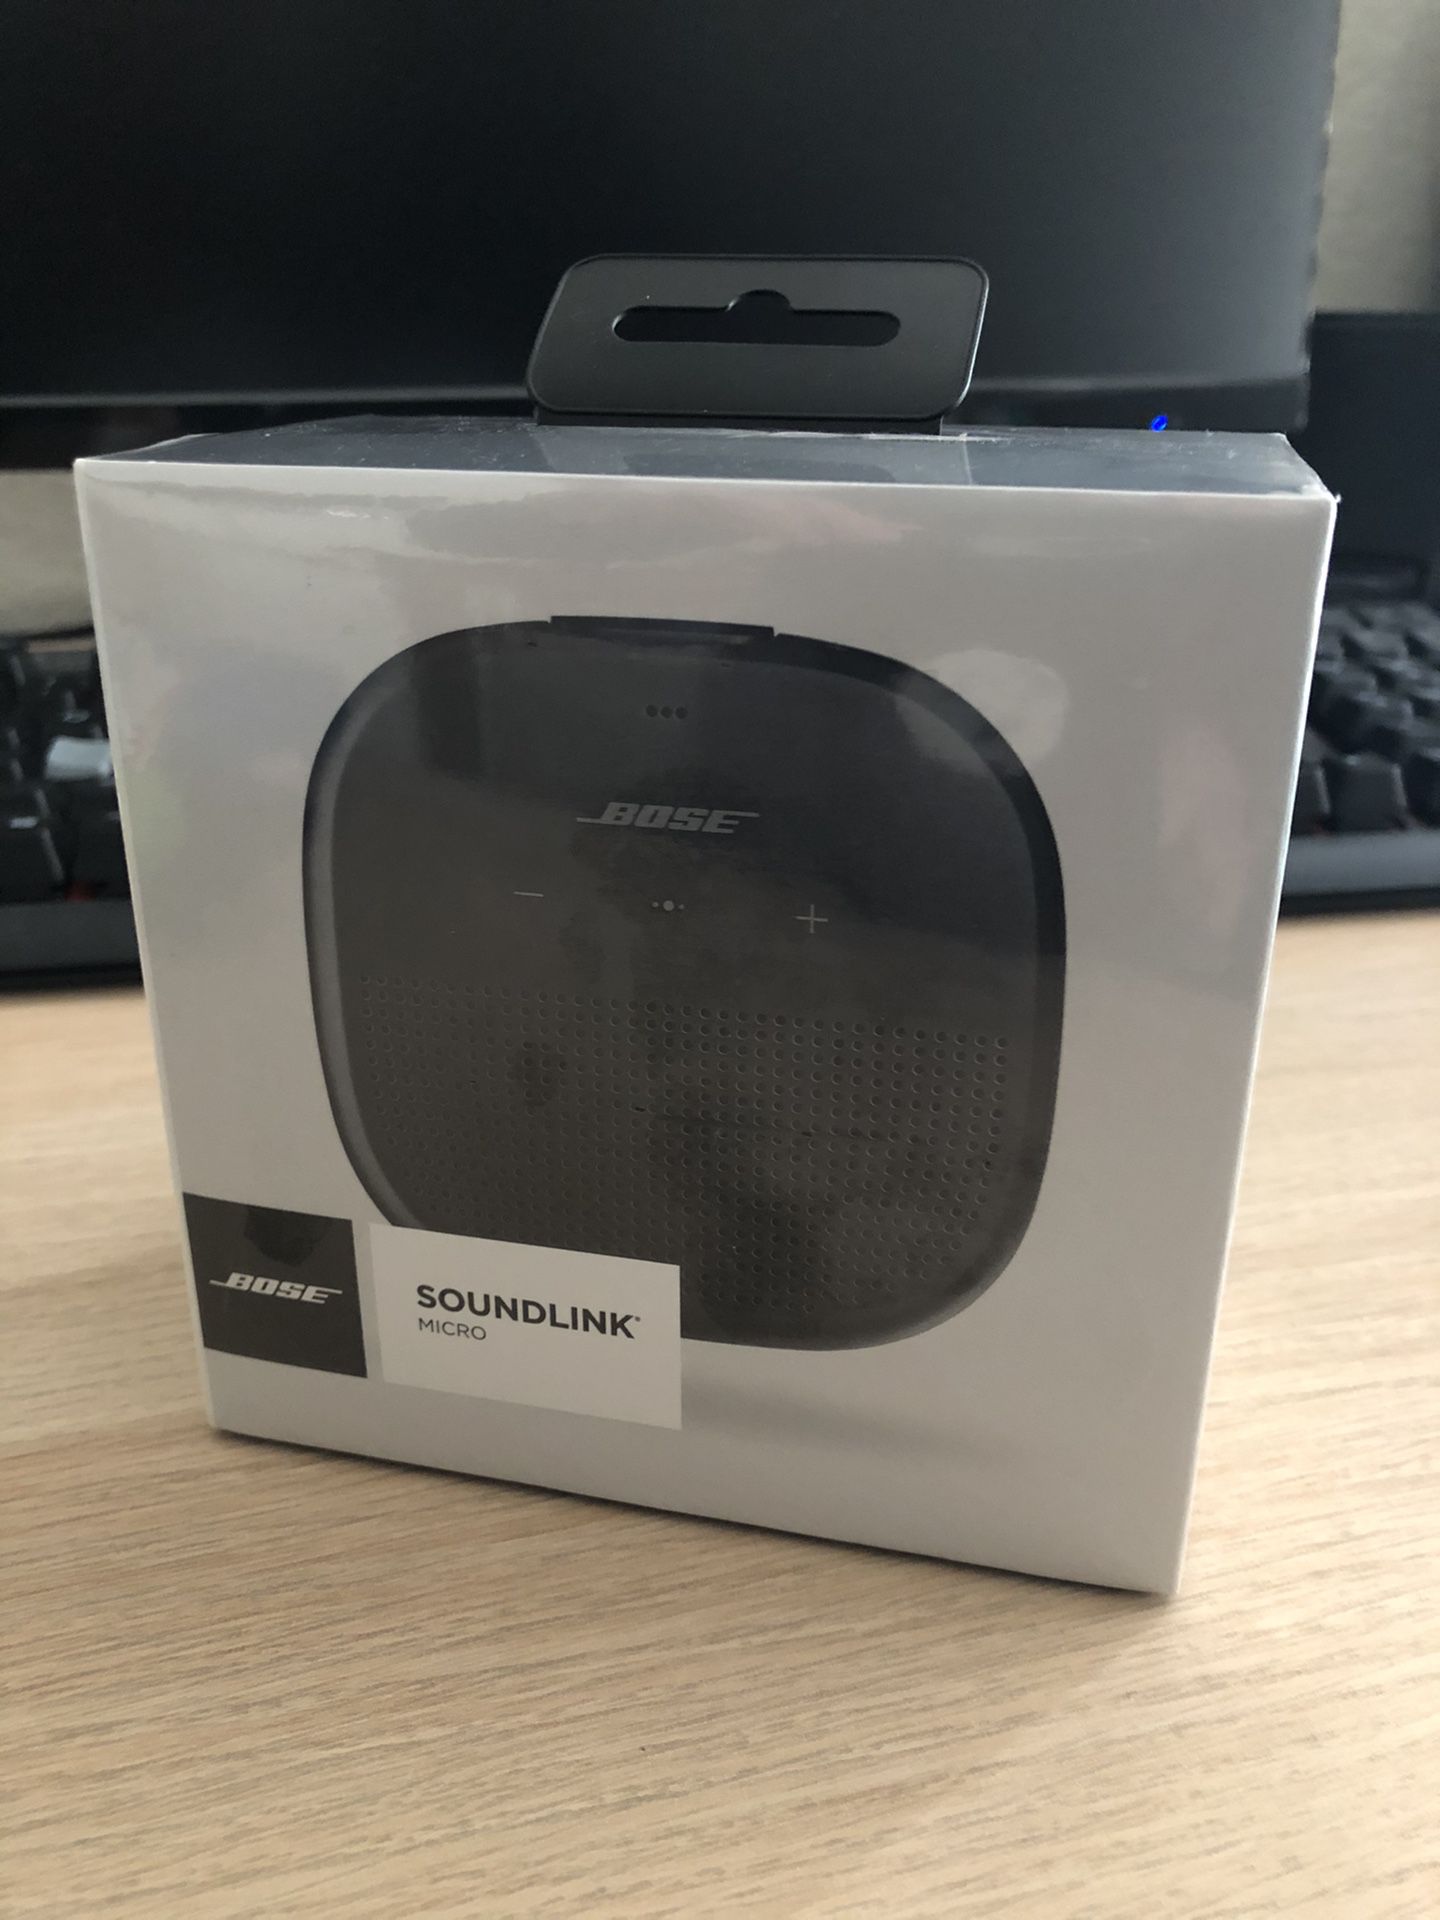 Bose Soundlink Micro Bluetooth Speaker - NEW, FACTORY SEALED